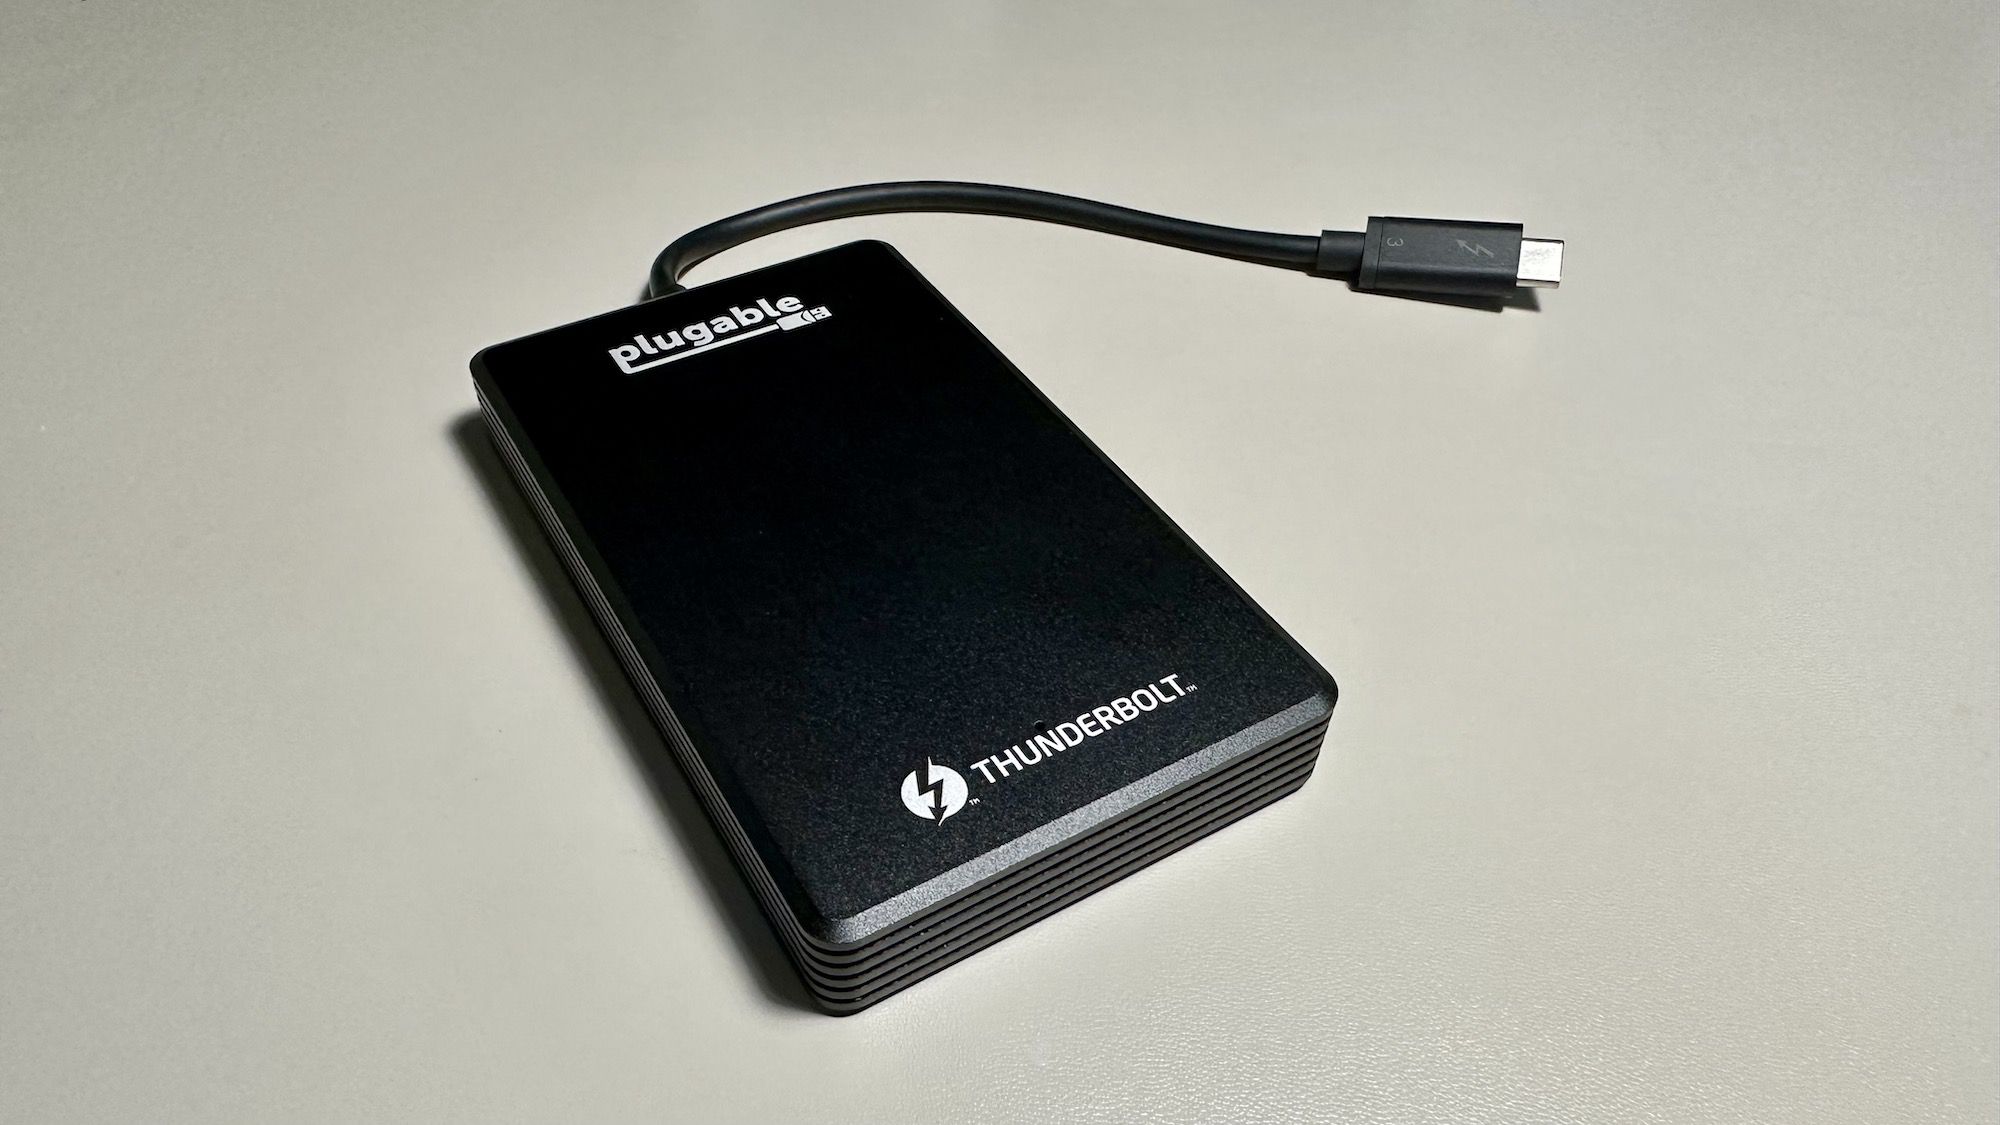 Plugable Thunderbolt 3 NVMe External SSD Review (2TB) - Price